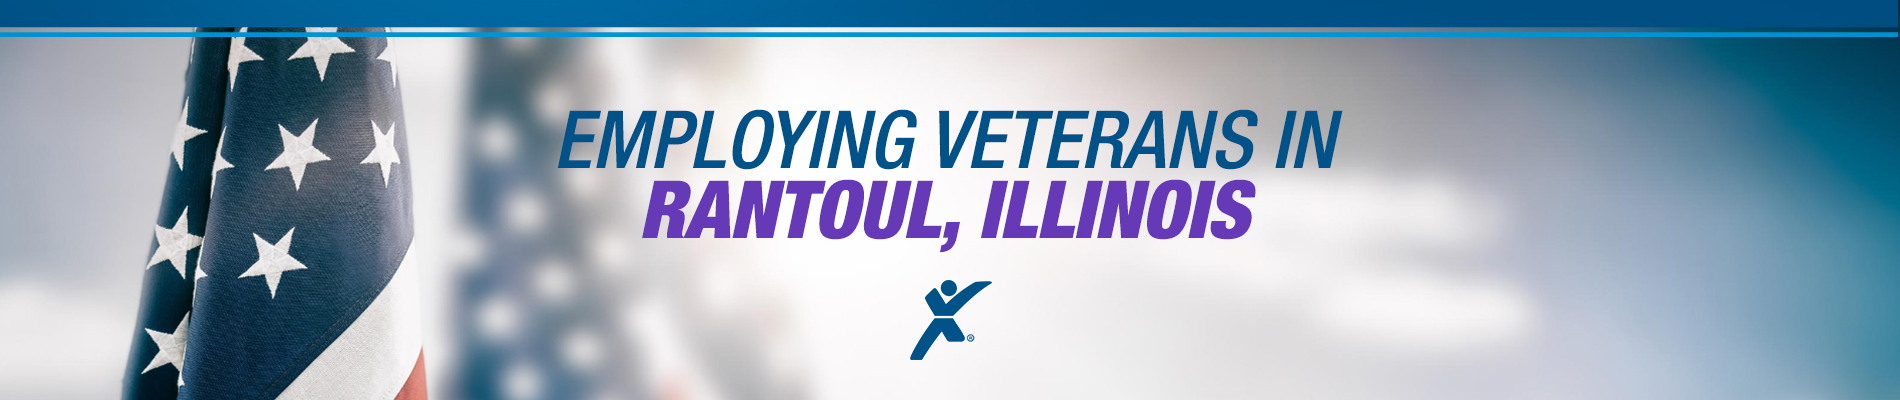 Express Is Now Hiring Veterans in Rantoul, Illinois